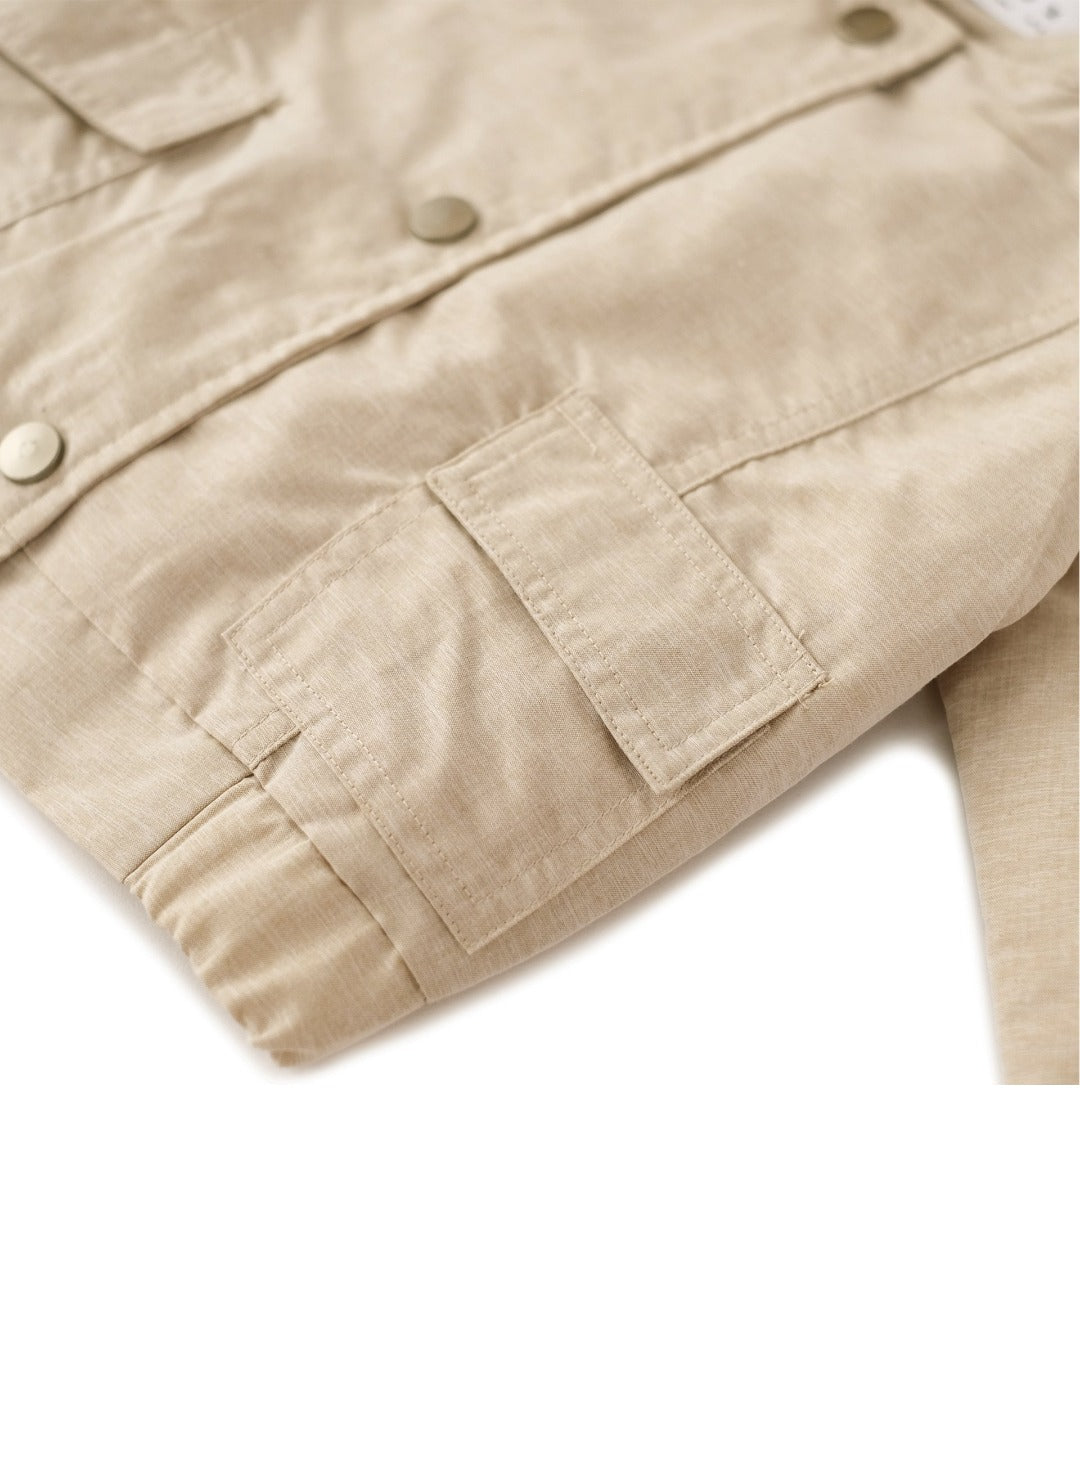 light weight khakis jacket with pockets